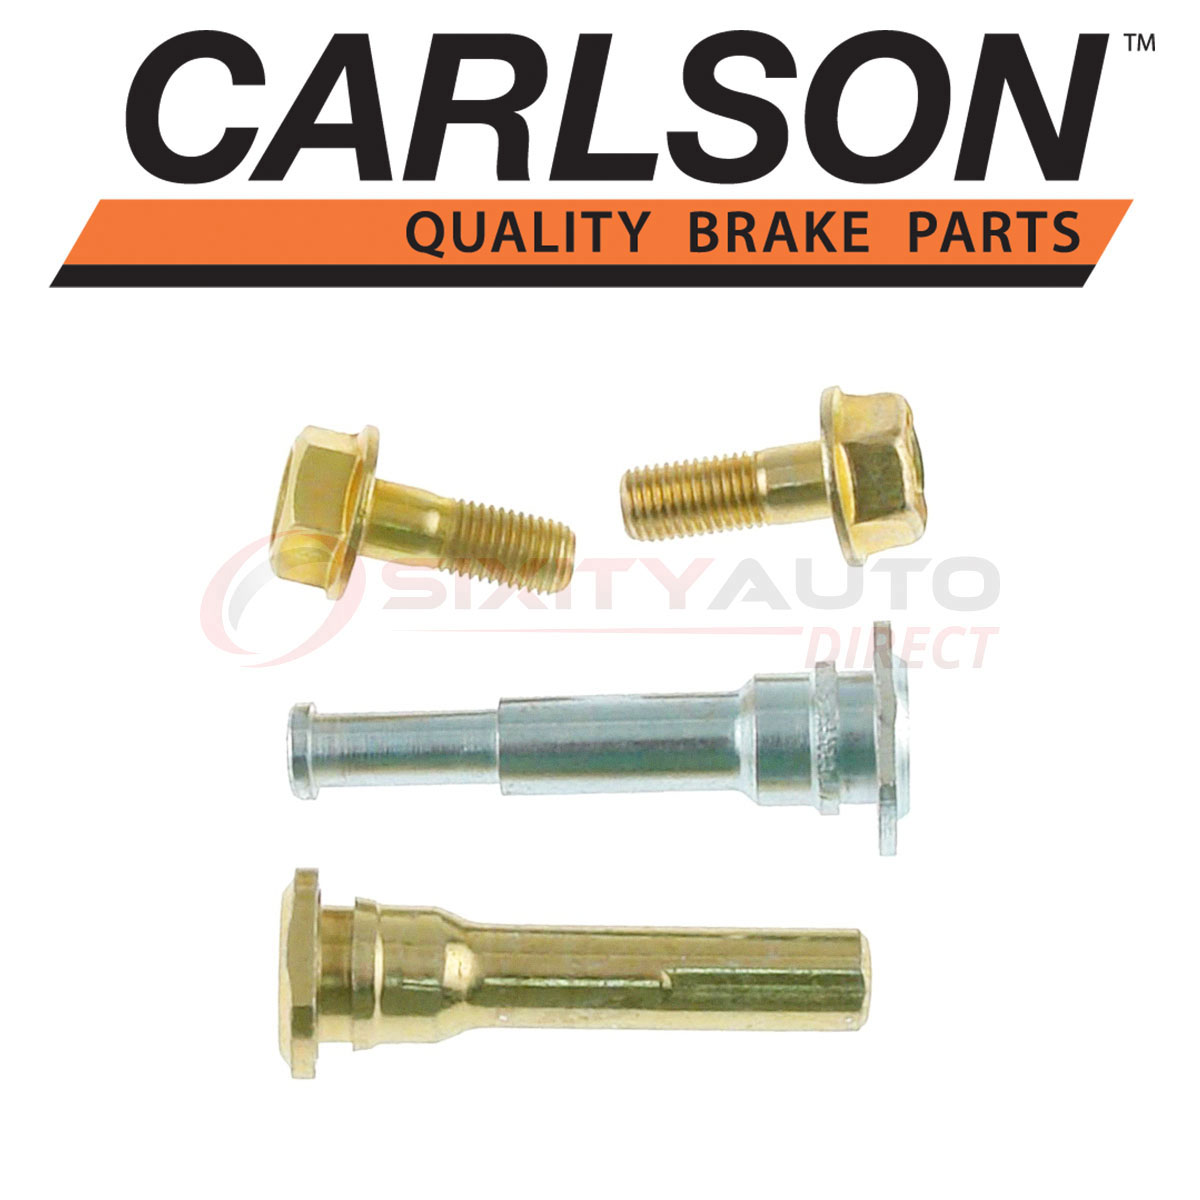 Carlson Quality Brake Parts 14068 Guide Pin Kit